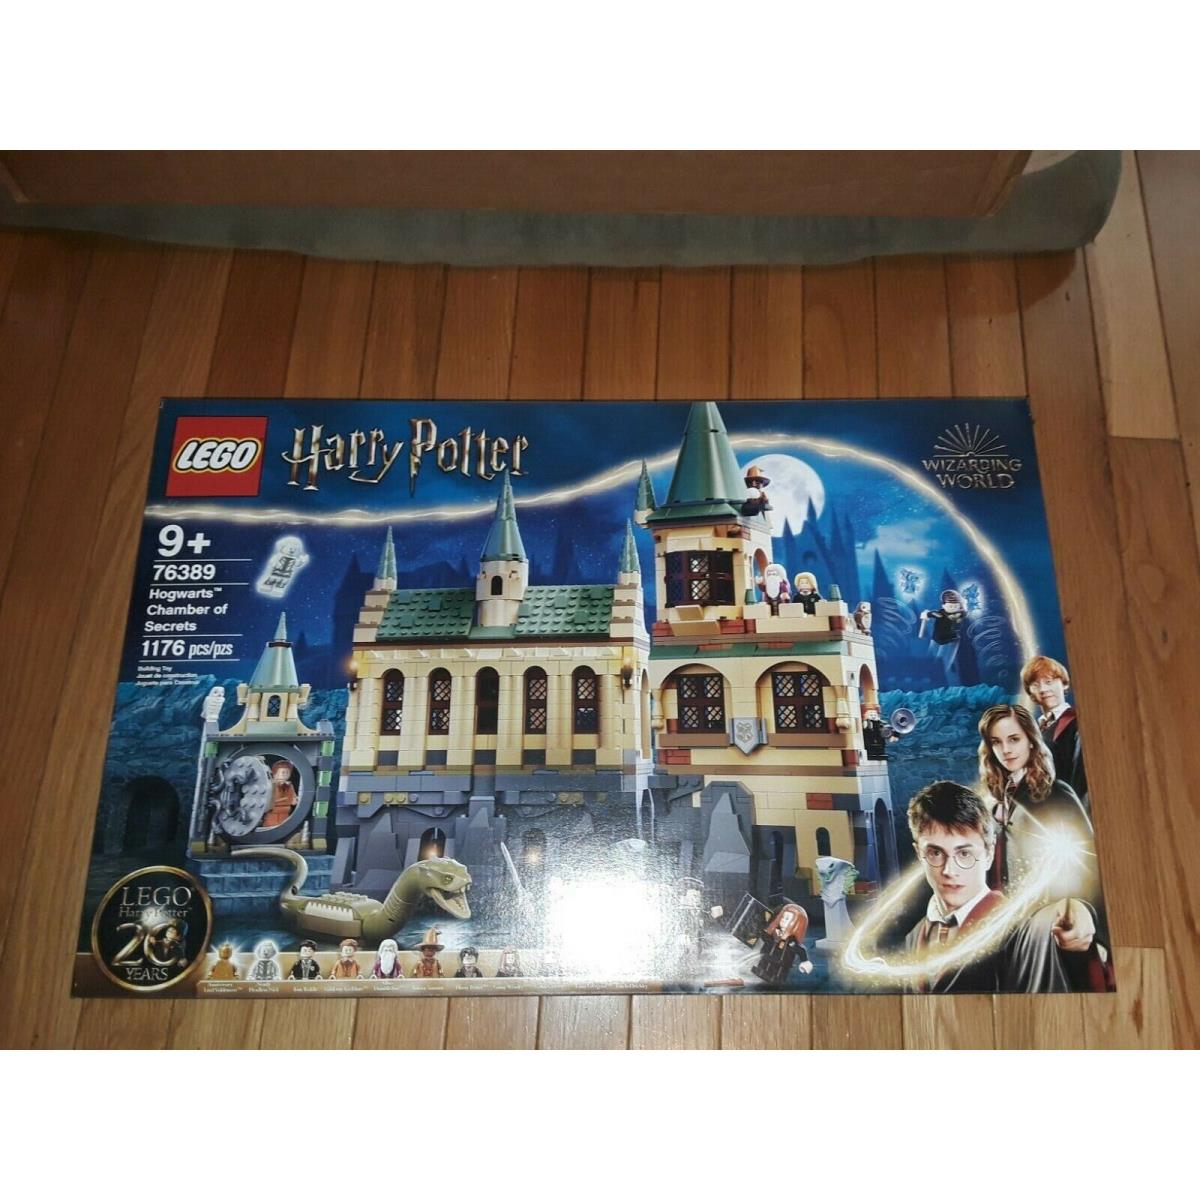 Lego Harry Potter 76389 Hogwarts Chamber of Secrets Wizarding World